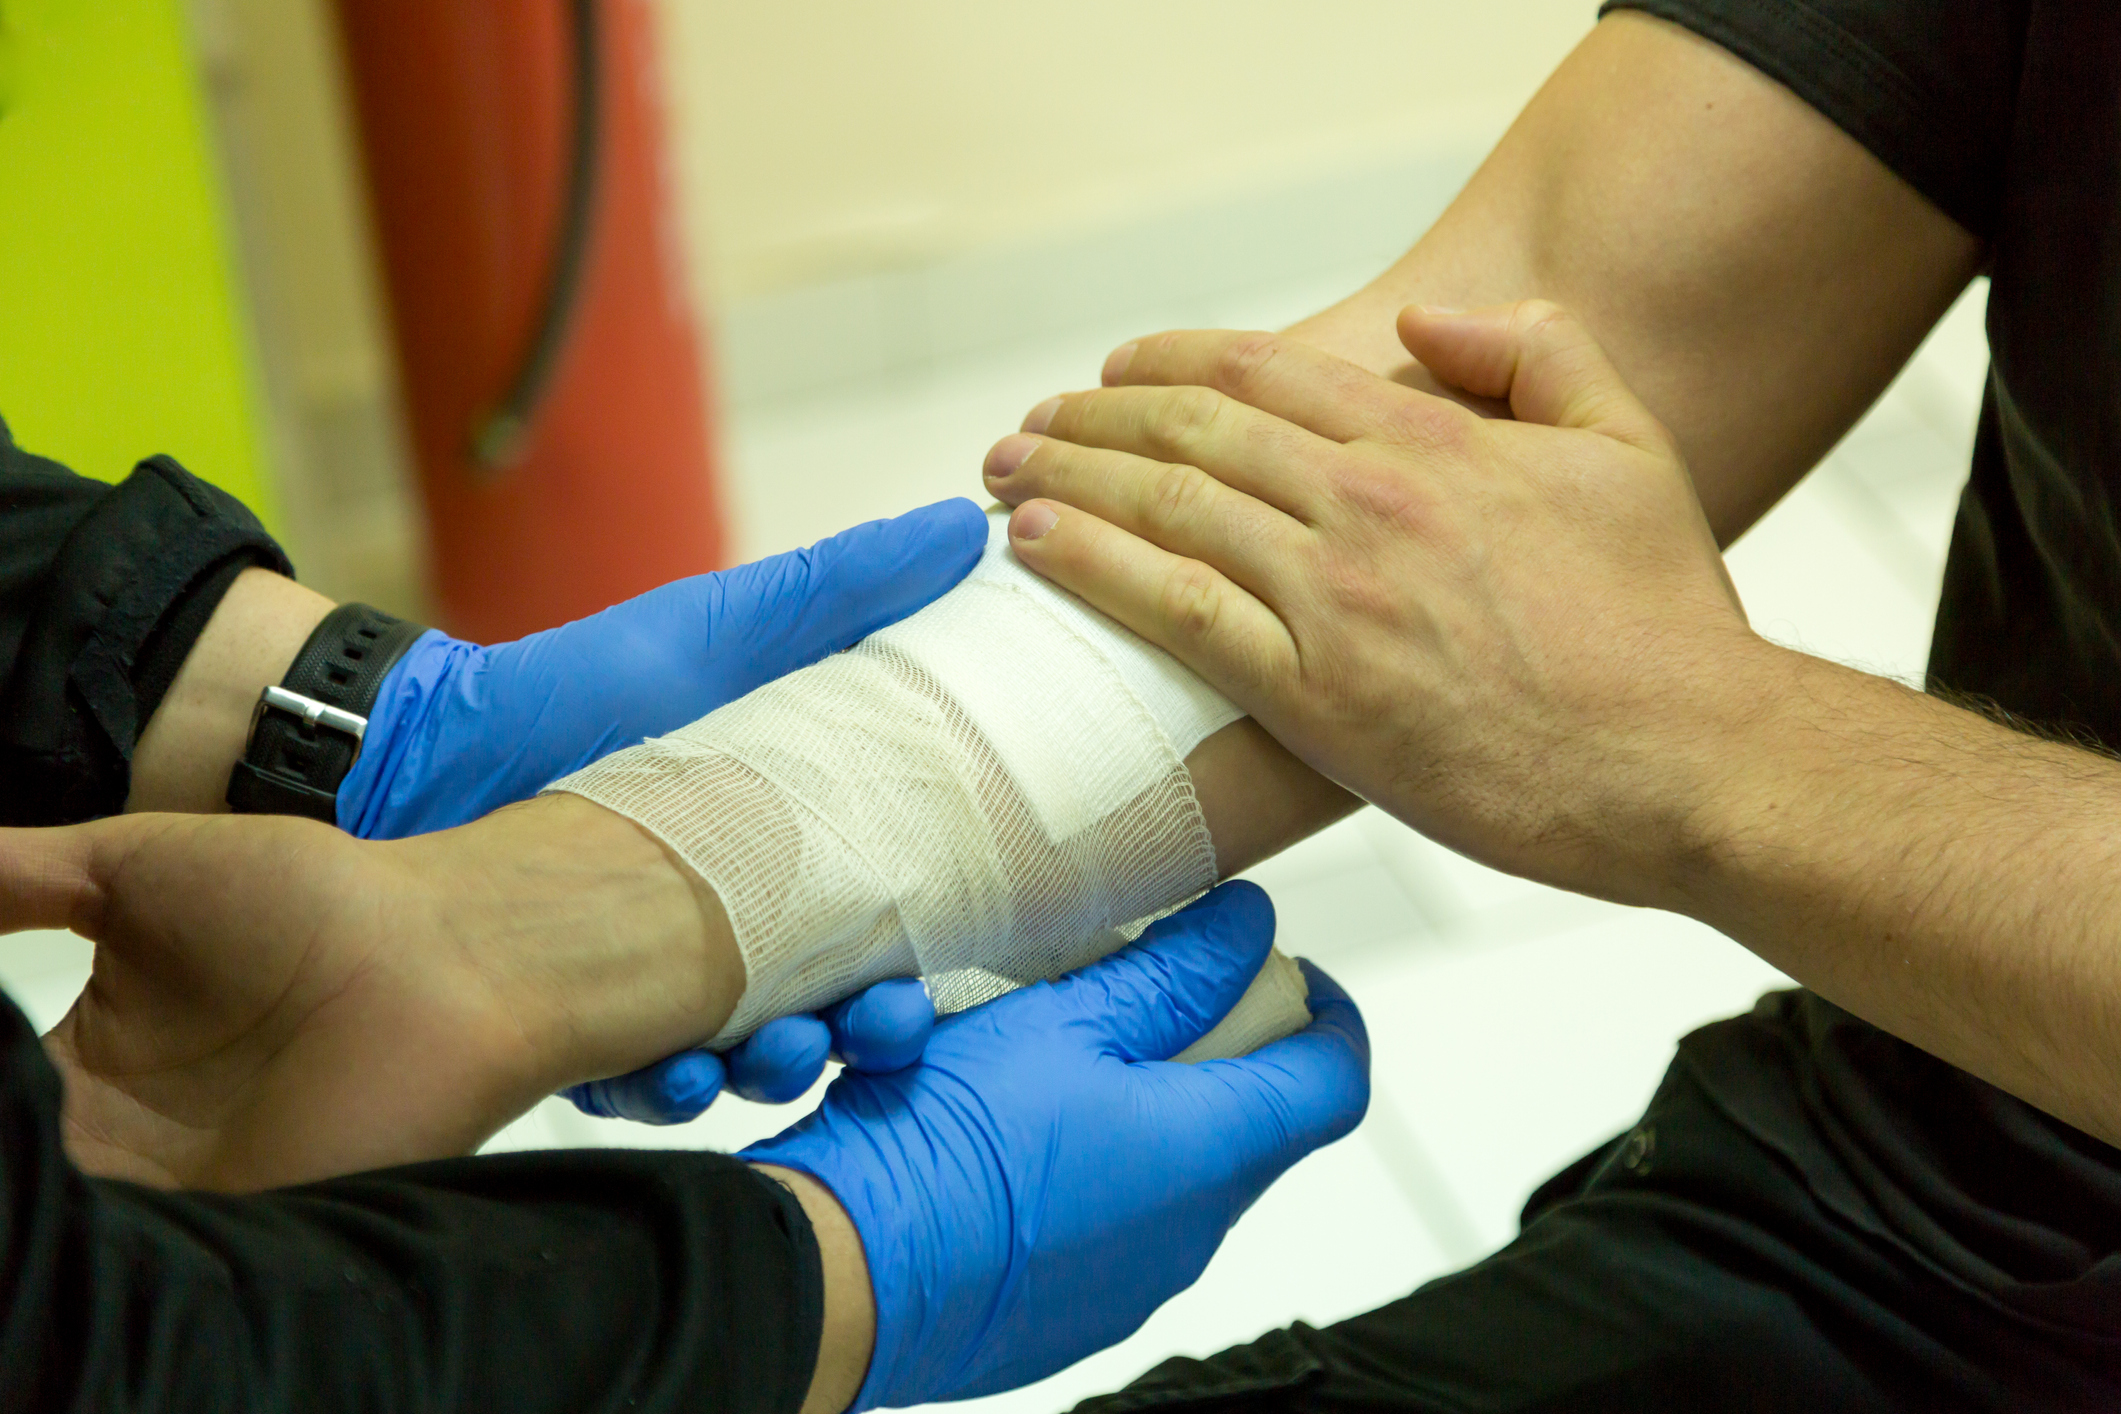 First aid training, bandaging